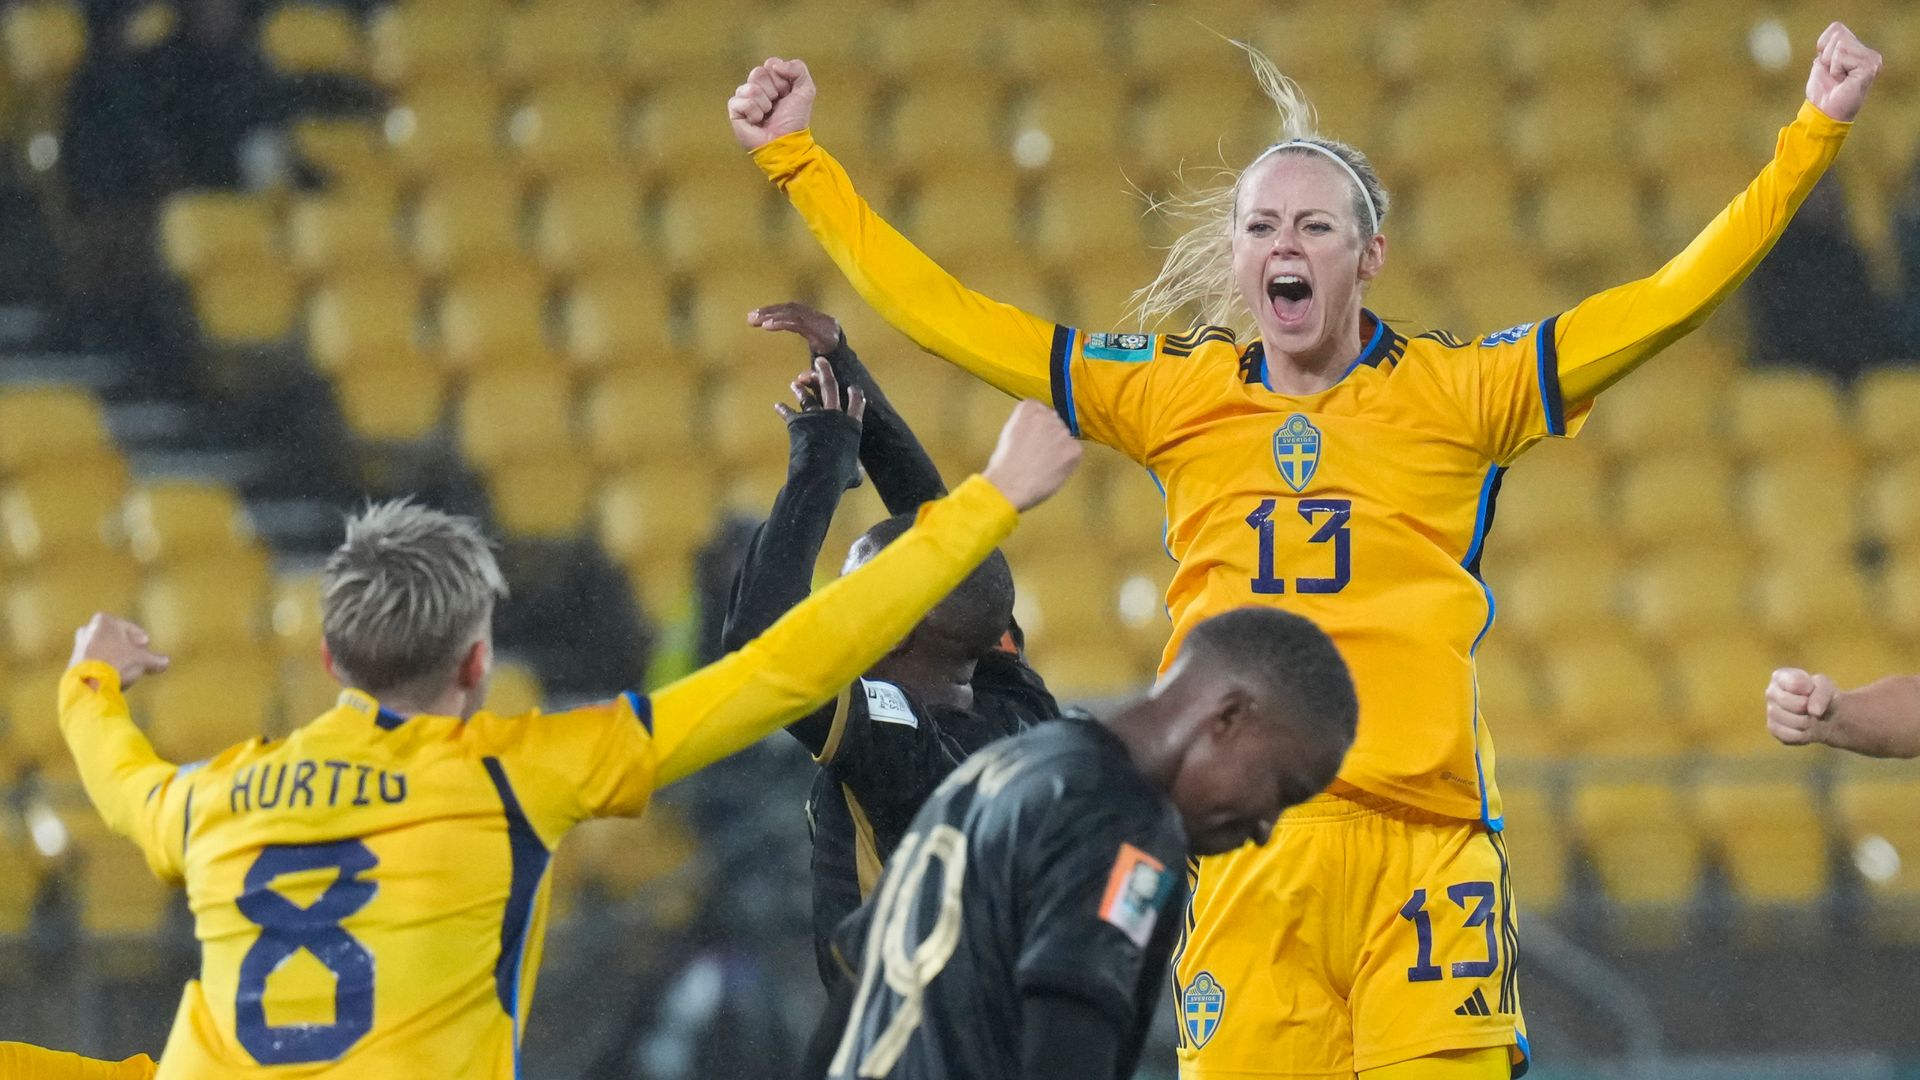 Ilestedt winner sees Sweden beat South Africa